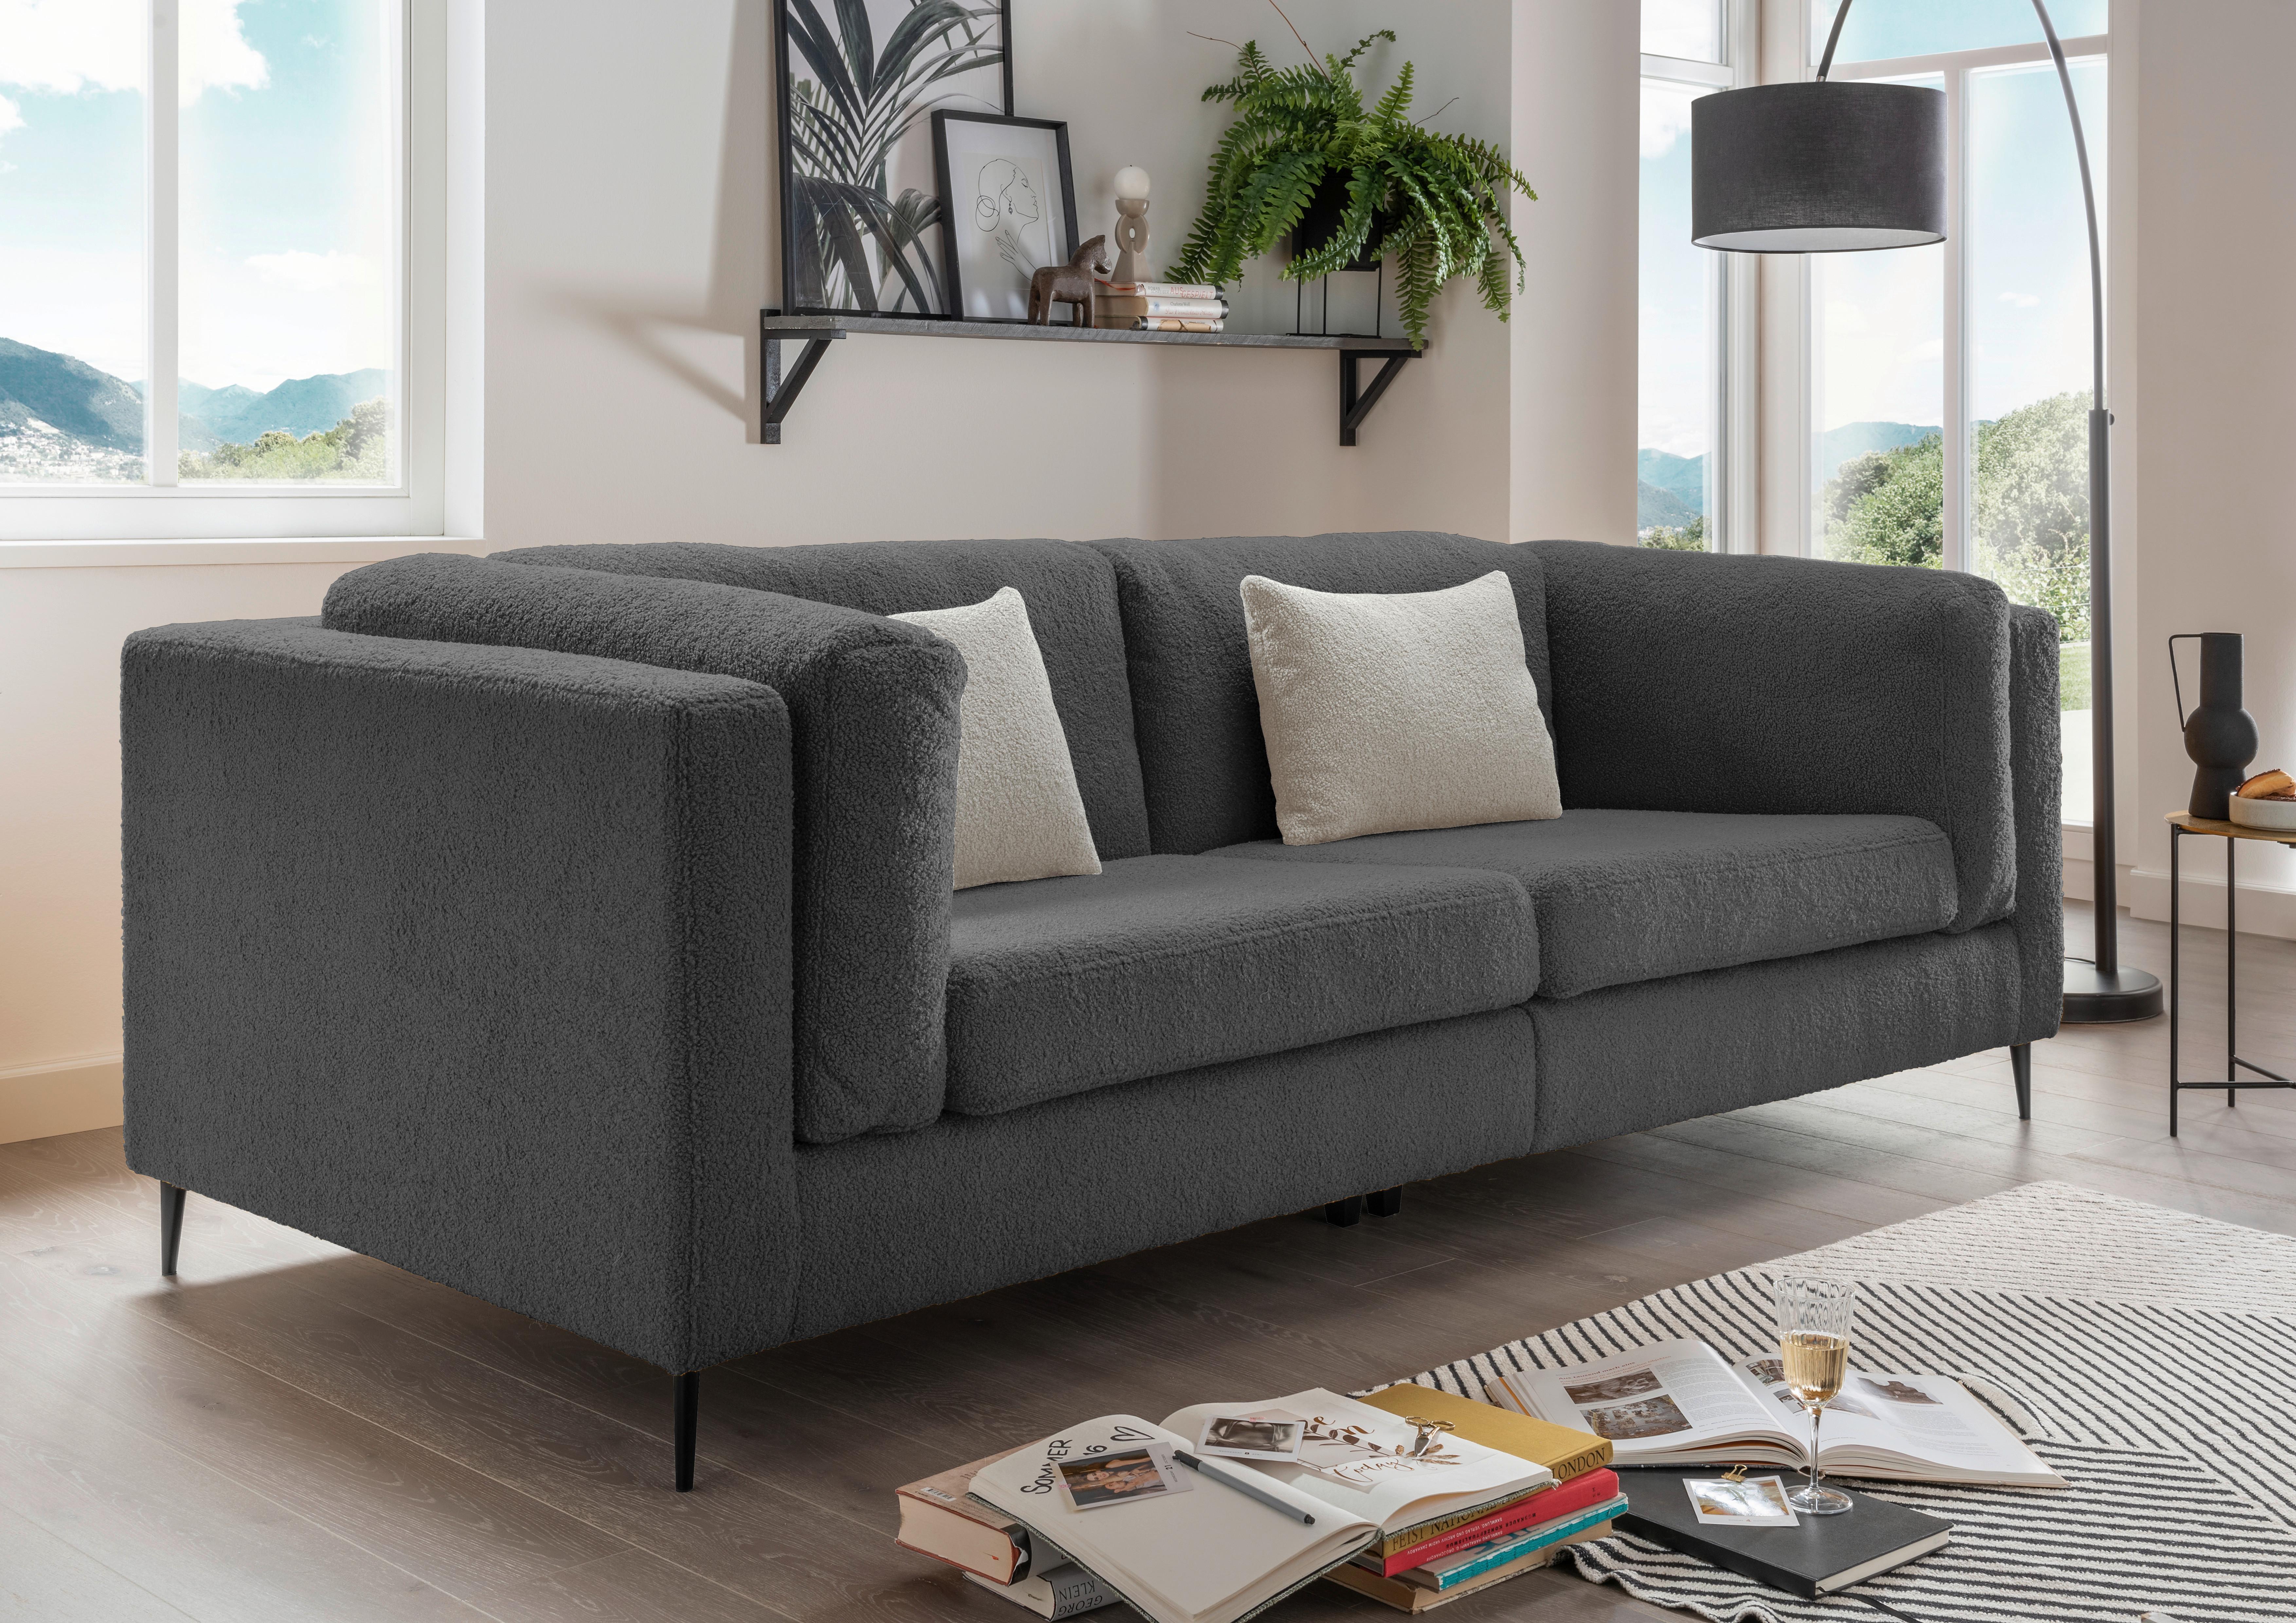 3-Sitzer-Sofa Roma Anthrazit Teddystoff - Anthrazit/Silberfarben, Design, Textil (250/82/112cm) - Livetastic